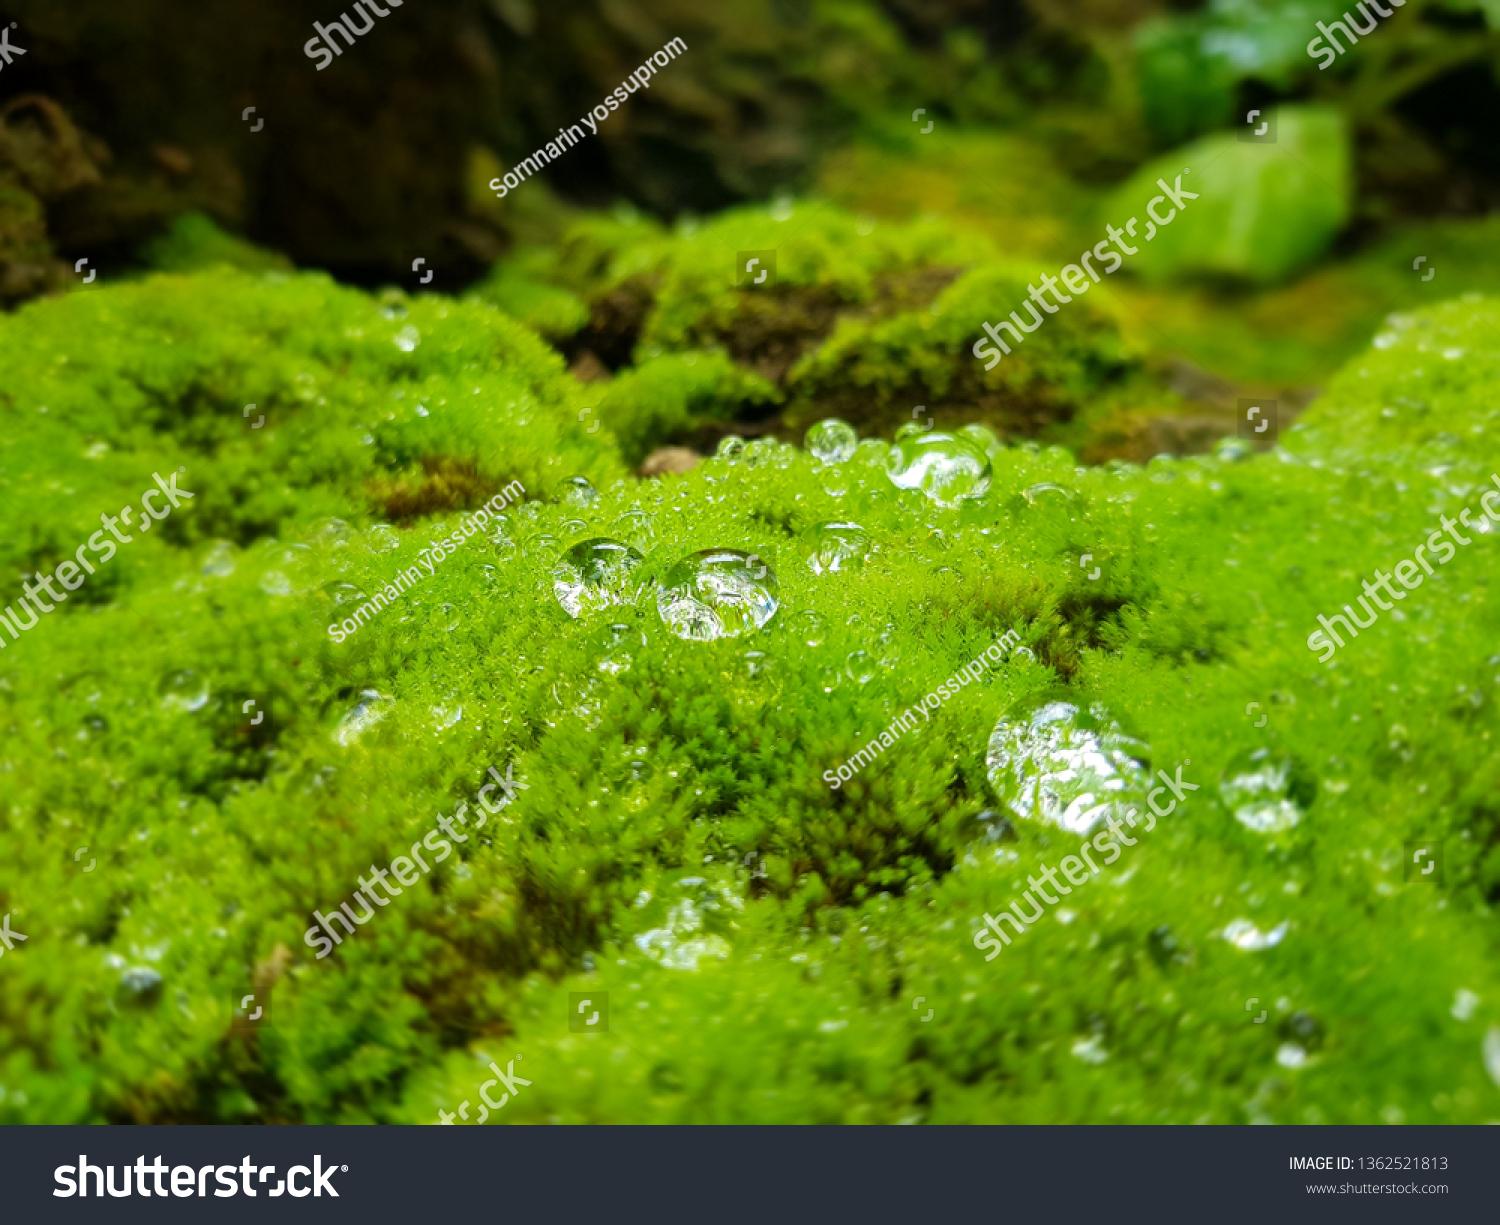 stock-photo-bryophyta-moss-plantae-1362521813.jpg